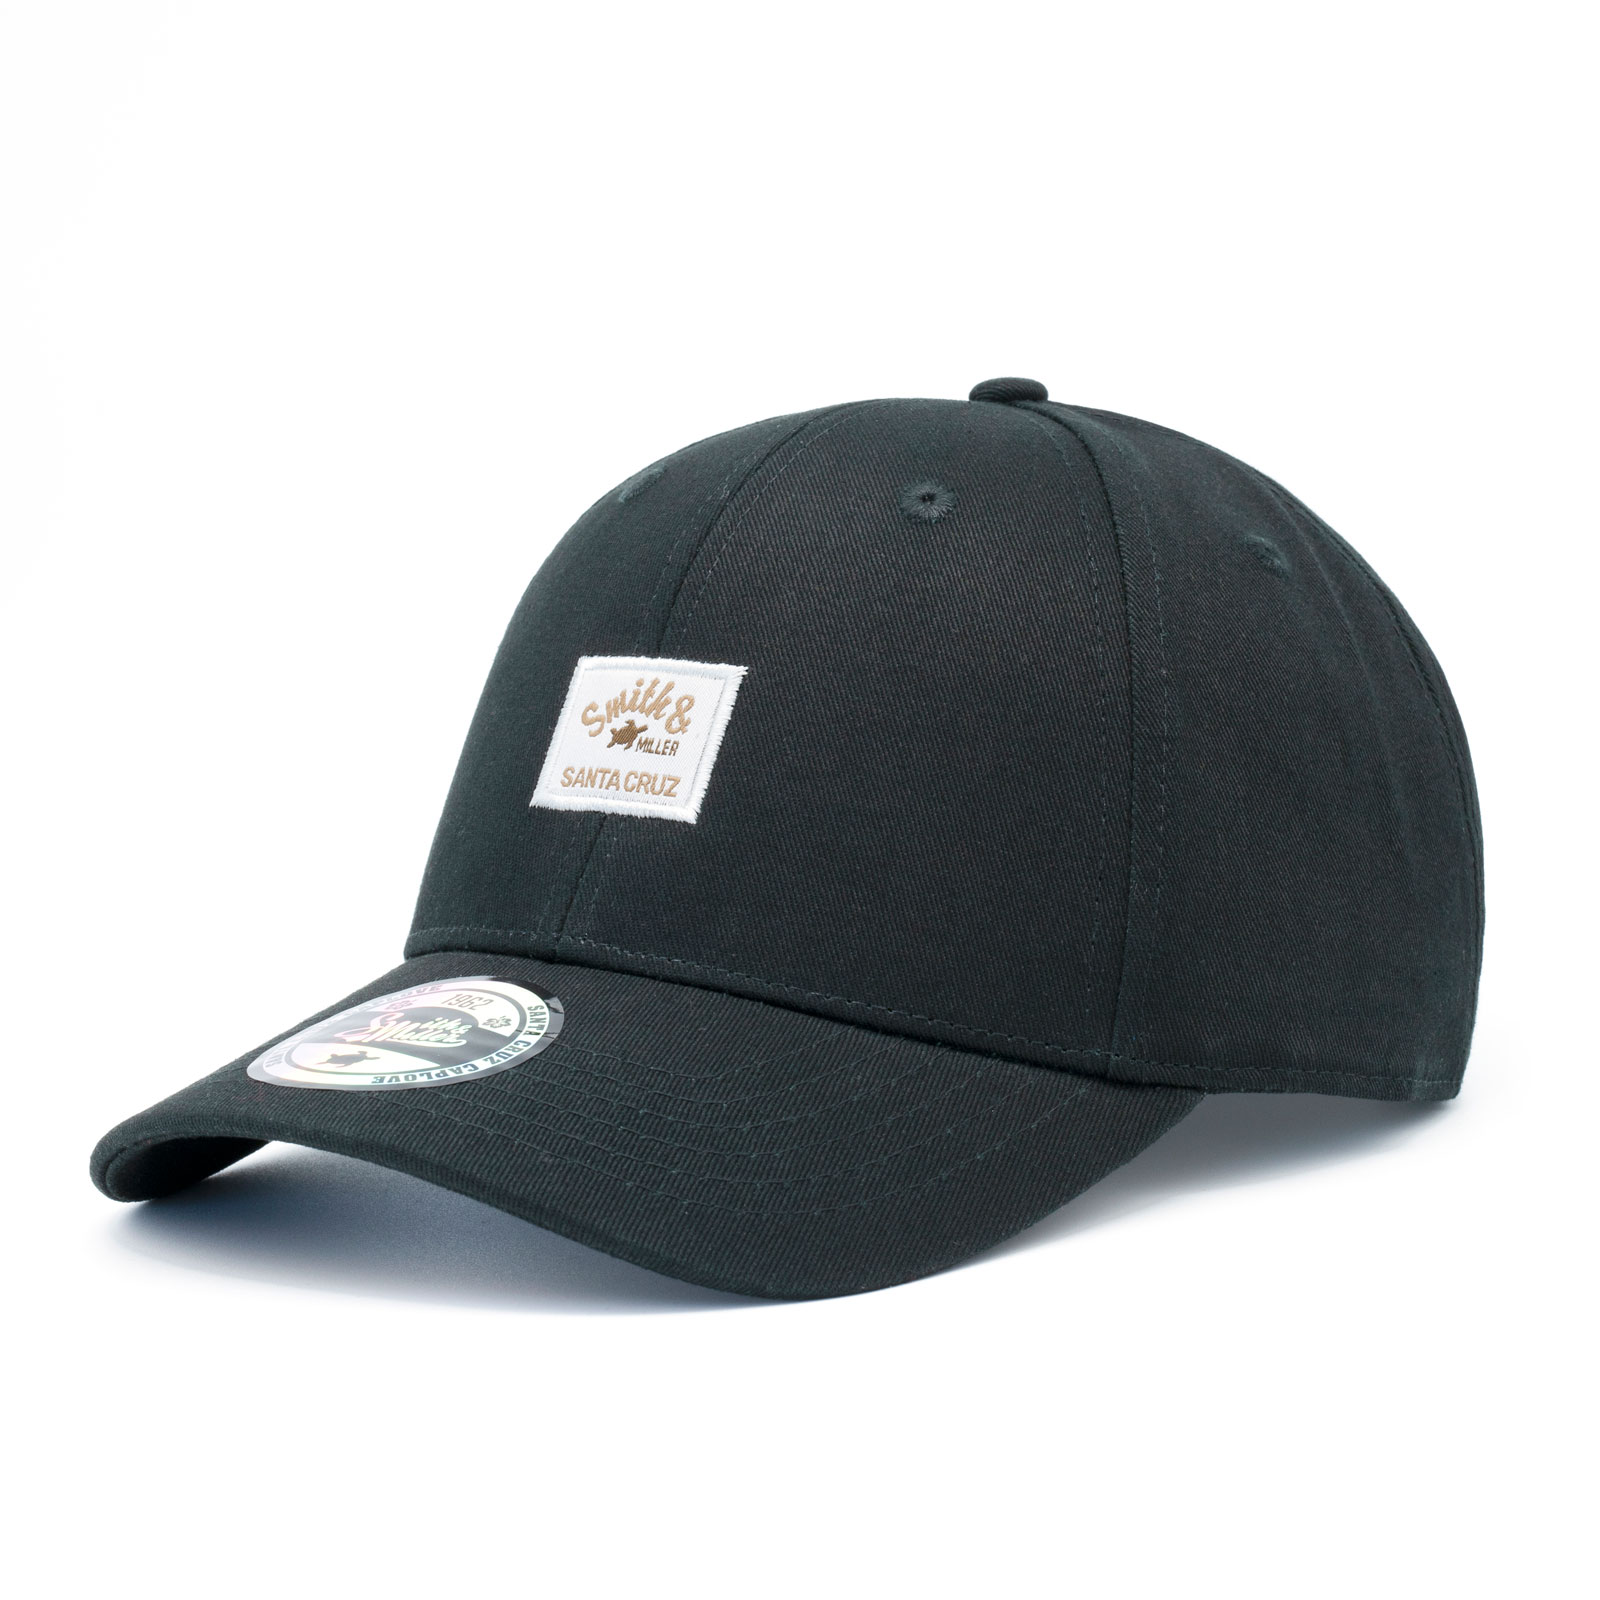 Smith & Miller Reno Unisex Curved Cap, black